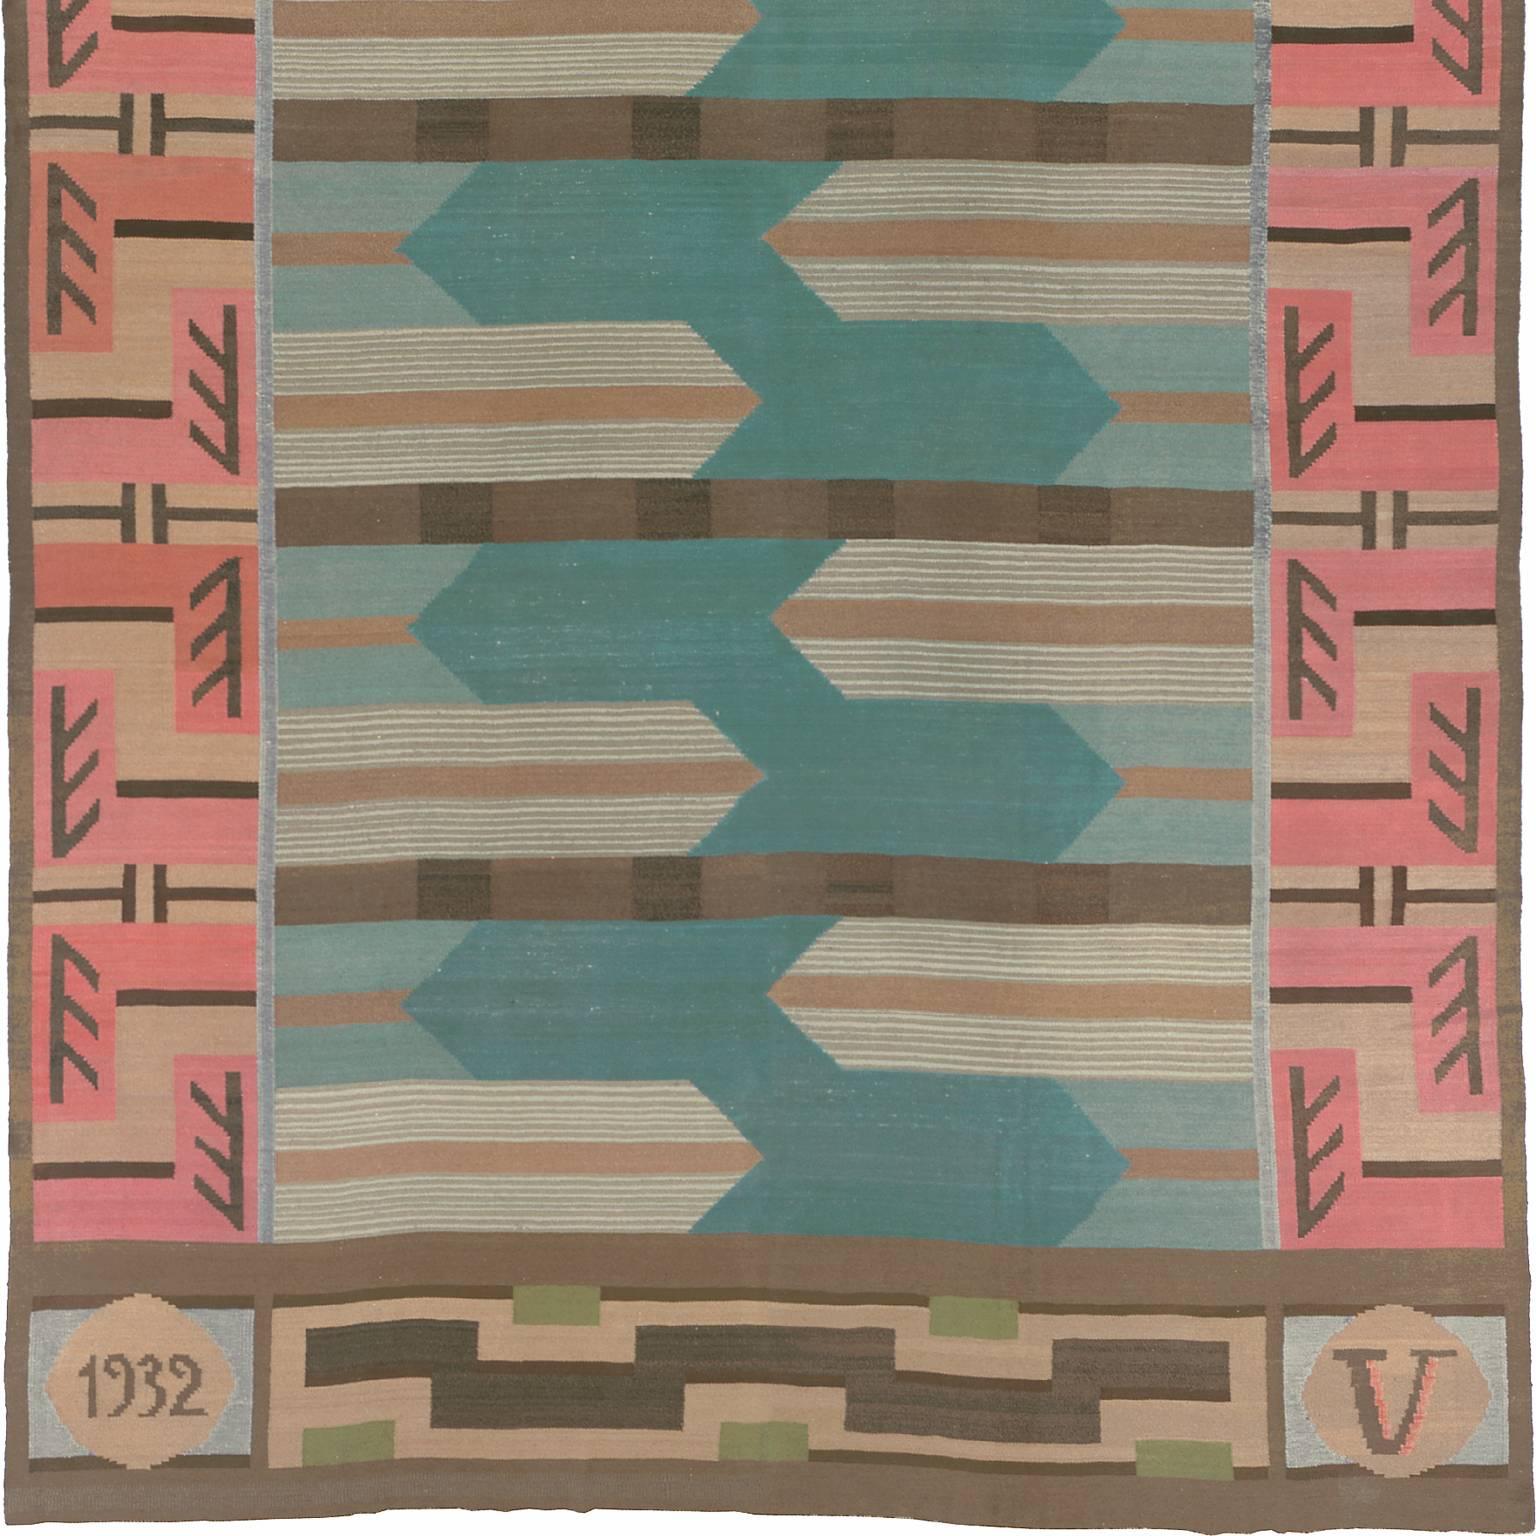 'V' mid-20th century Finnish flat rug by Greta Skogster 
Finland, circa 1932-1933
Designed by Greta Skogster, 1929
Woven by Kiikan Kotomo
Handwoven.